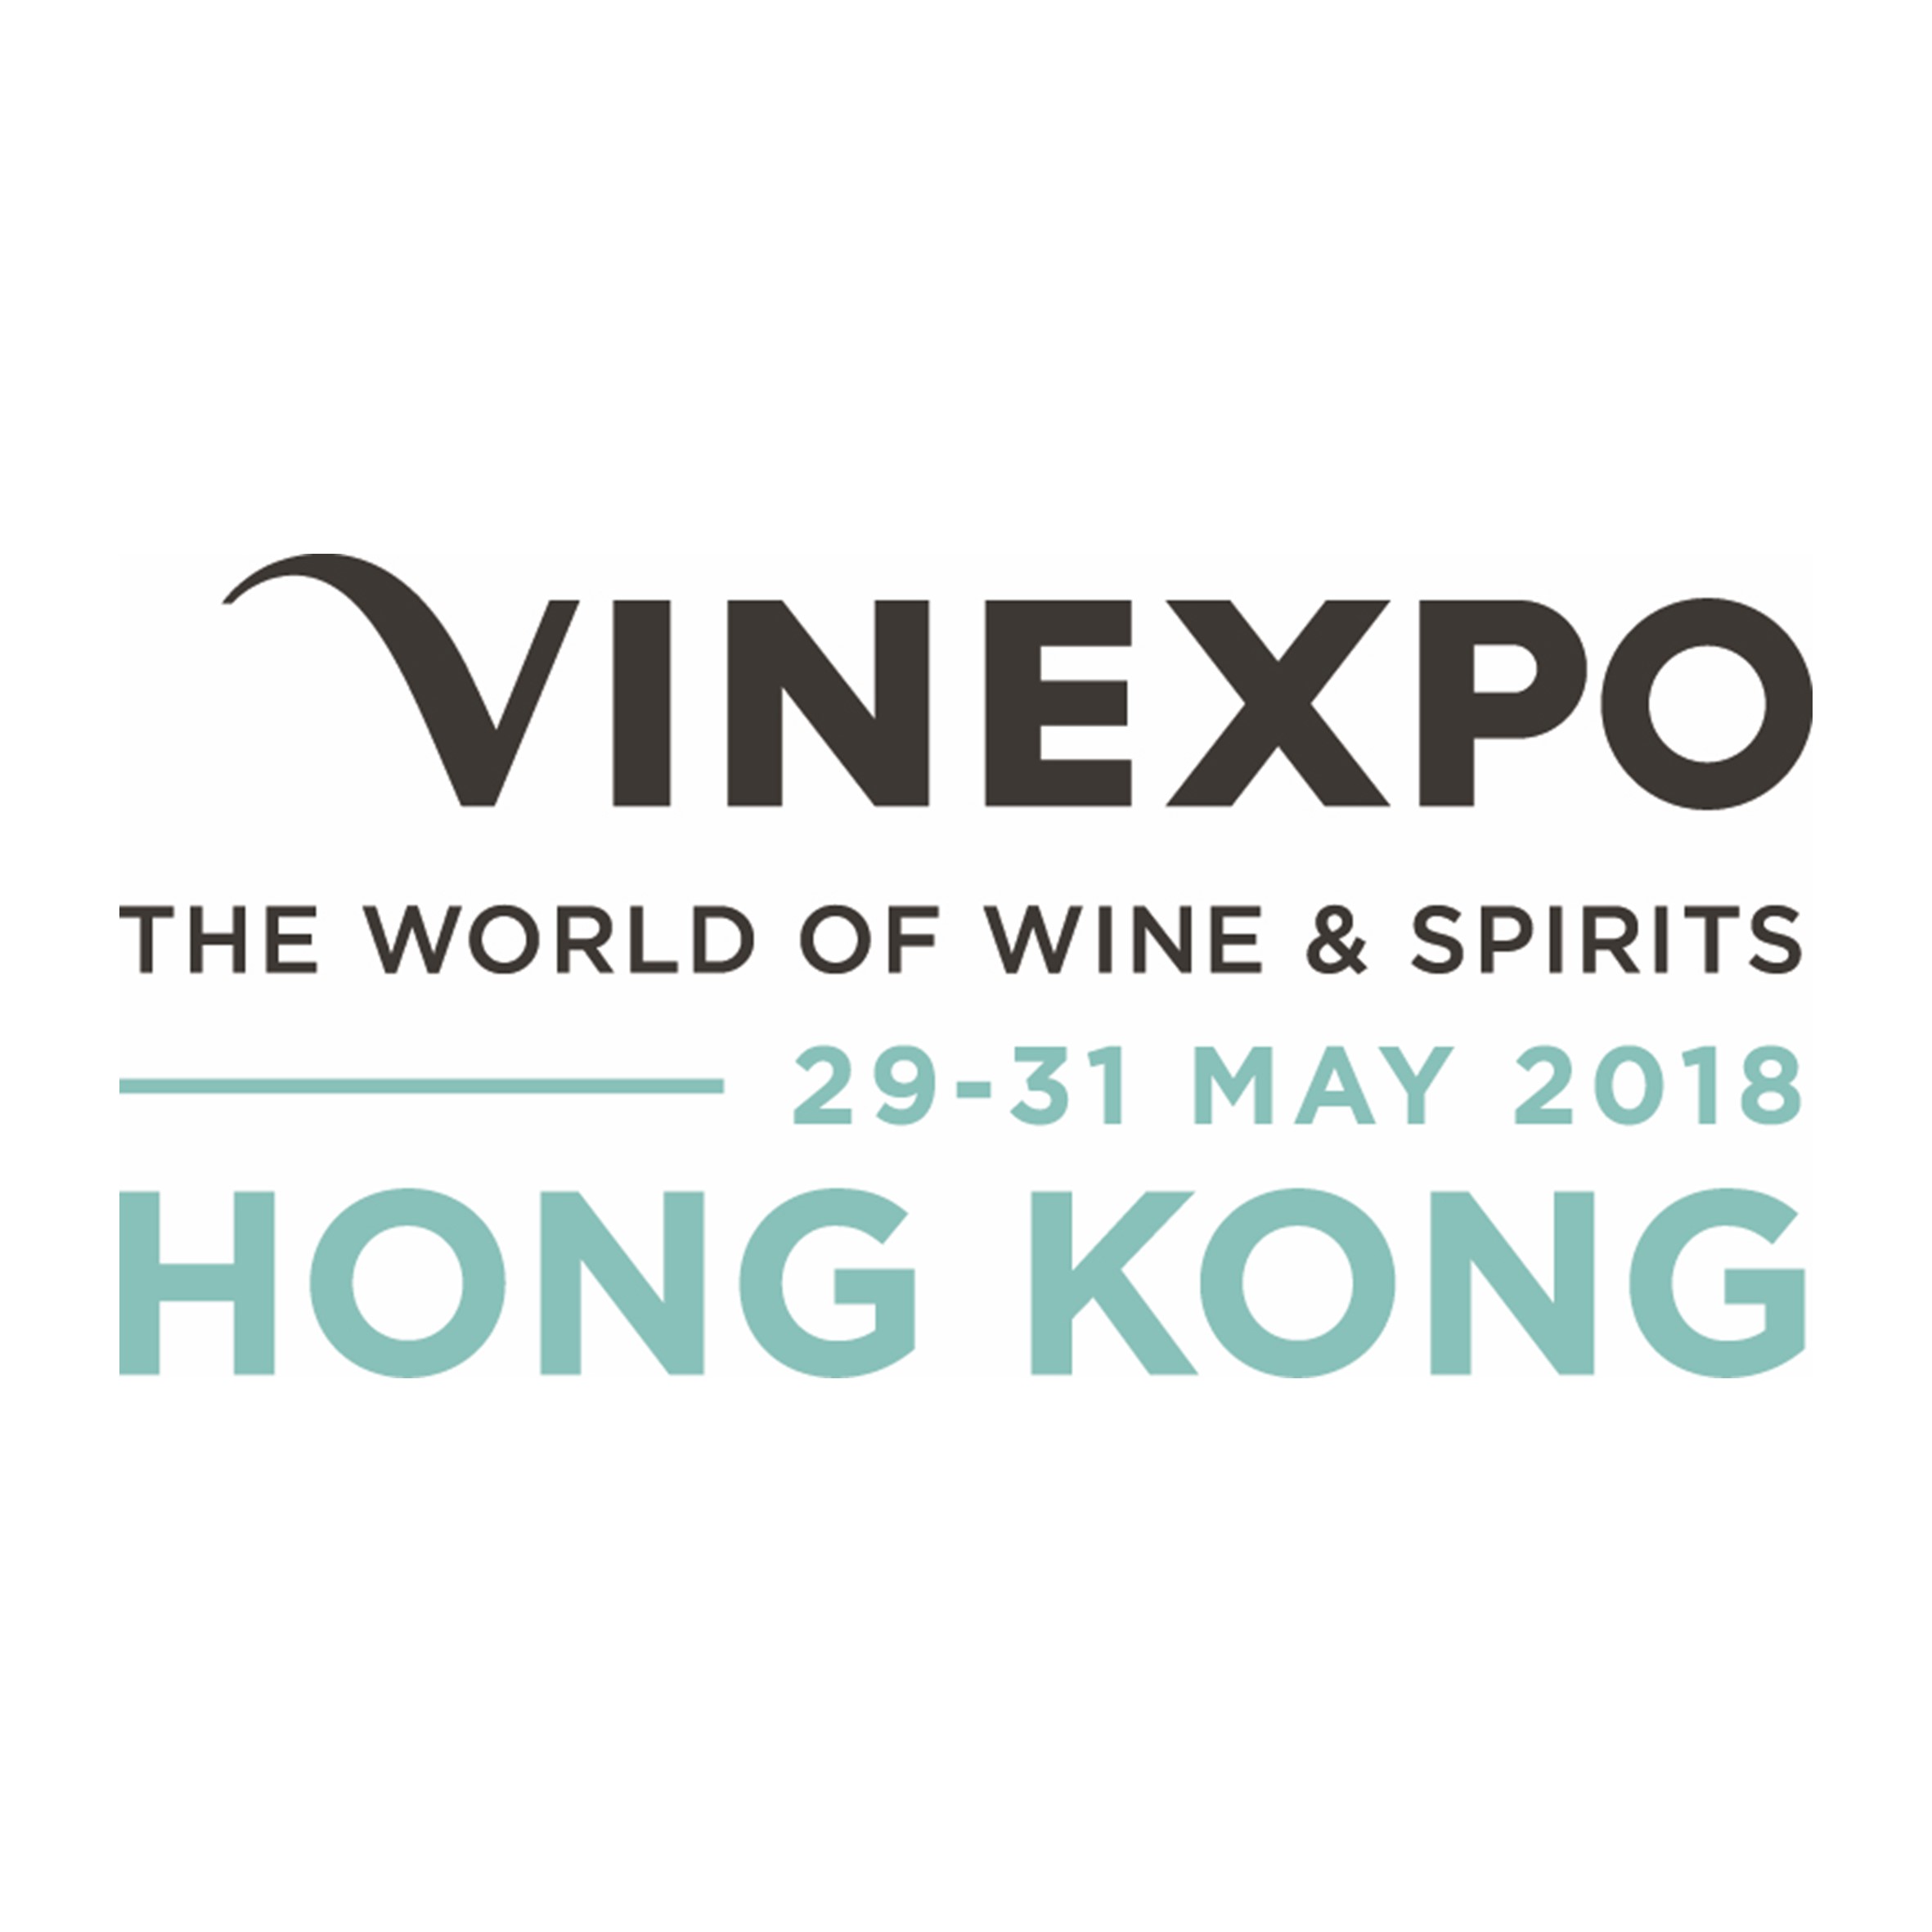 Vinexpo Hong Kong Logo 2018 - Sustainable growth